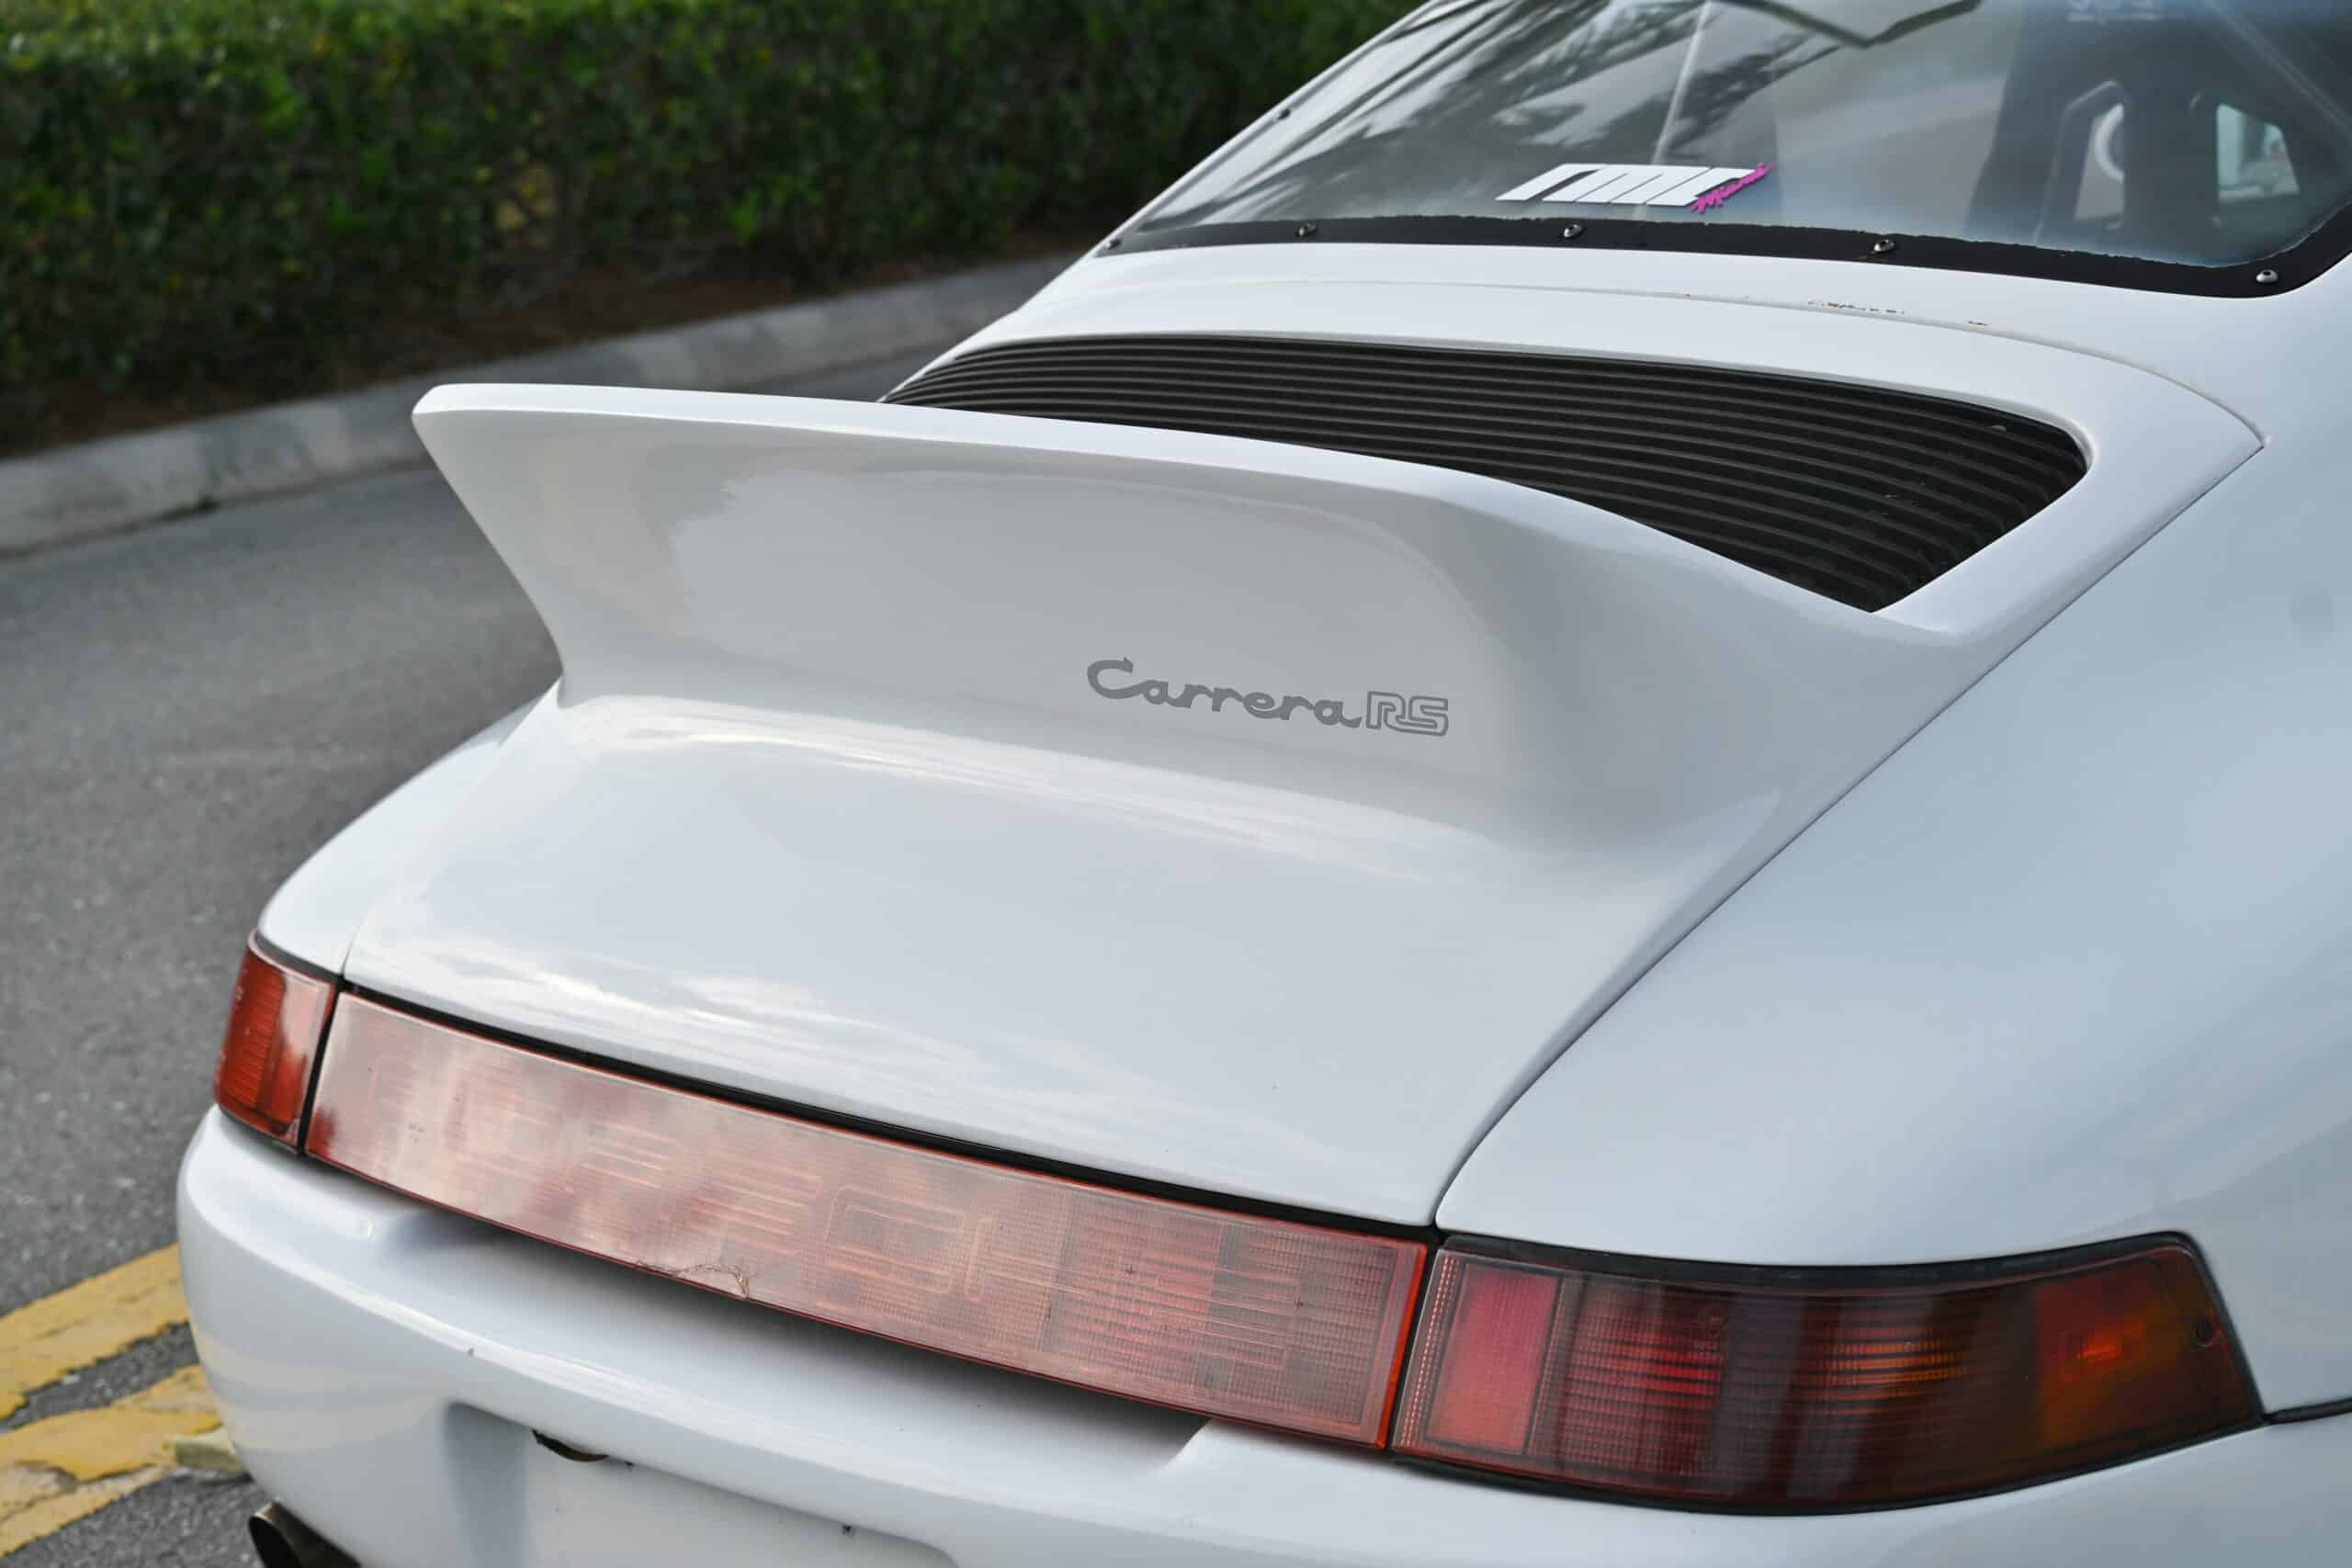 1984 Porsche 911 Carrera Widebody Custom Outlaw build -Coil over Conversion- BBS wheels- Brembo Brakes- Cali Car